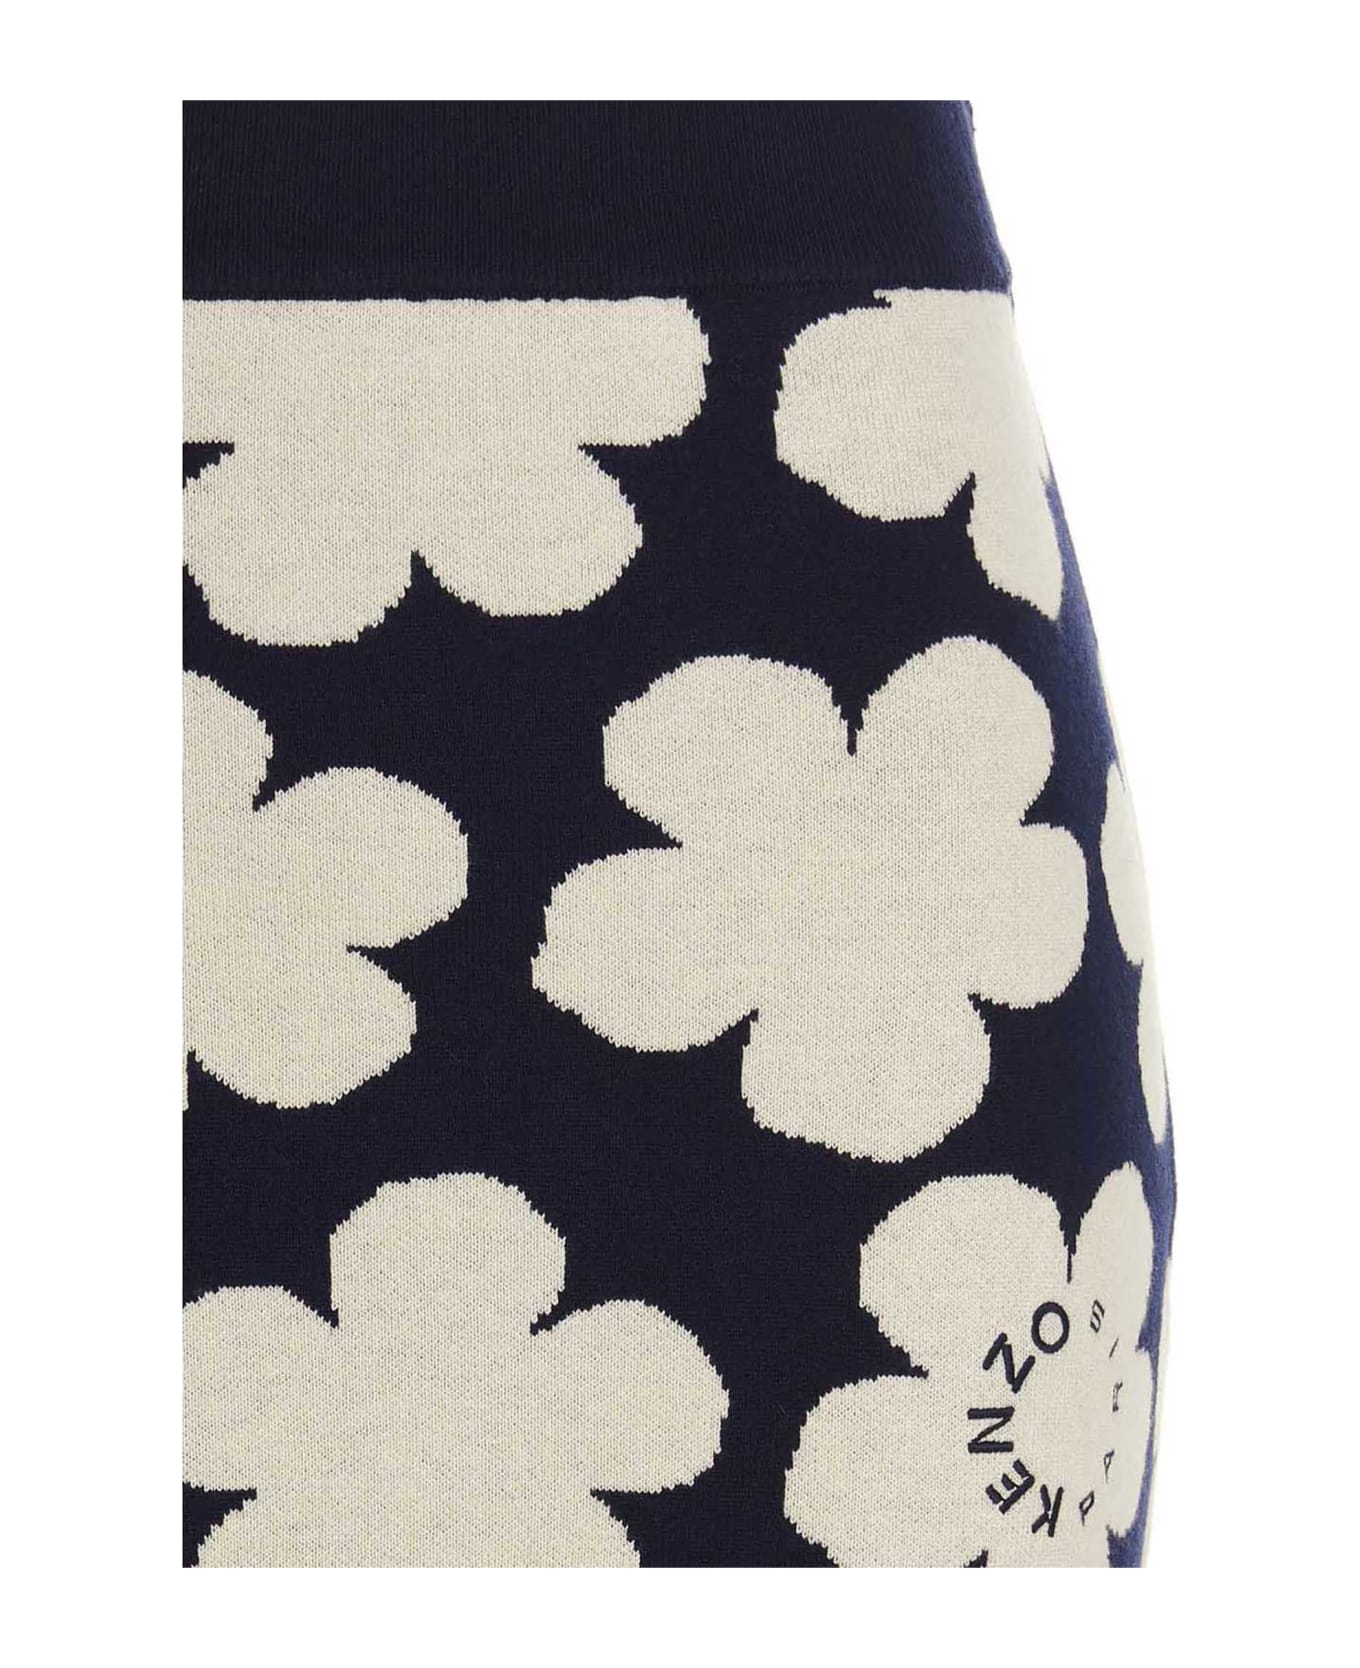 Kenzo Floral Patterned Mini Skirt - Blue スカート